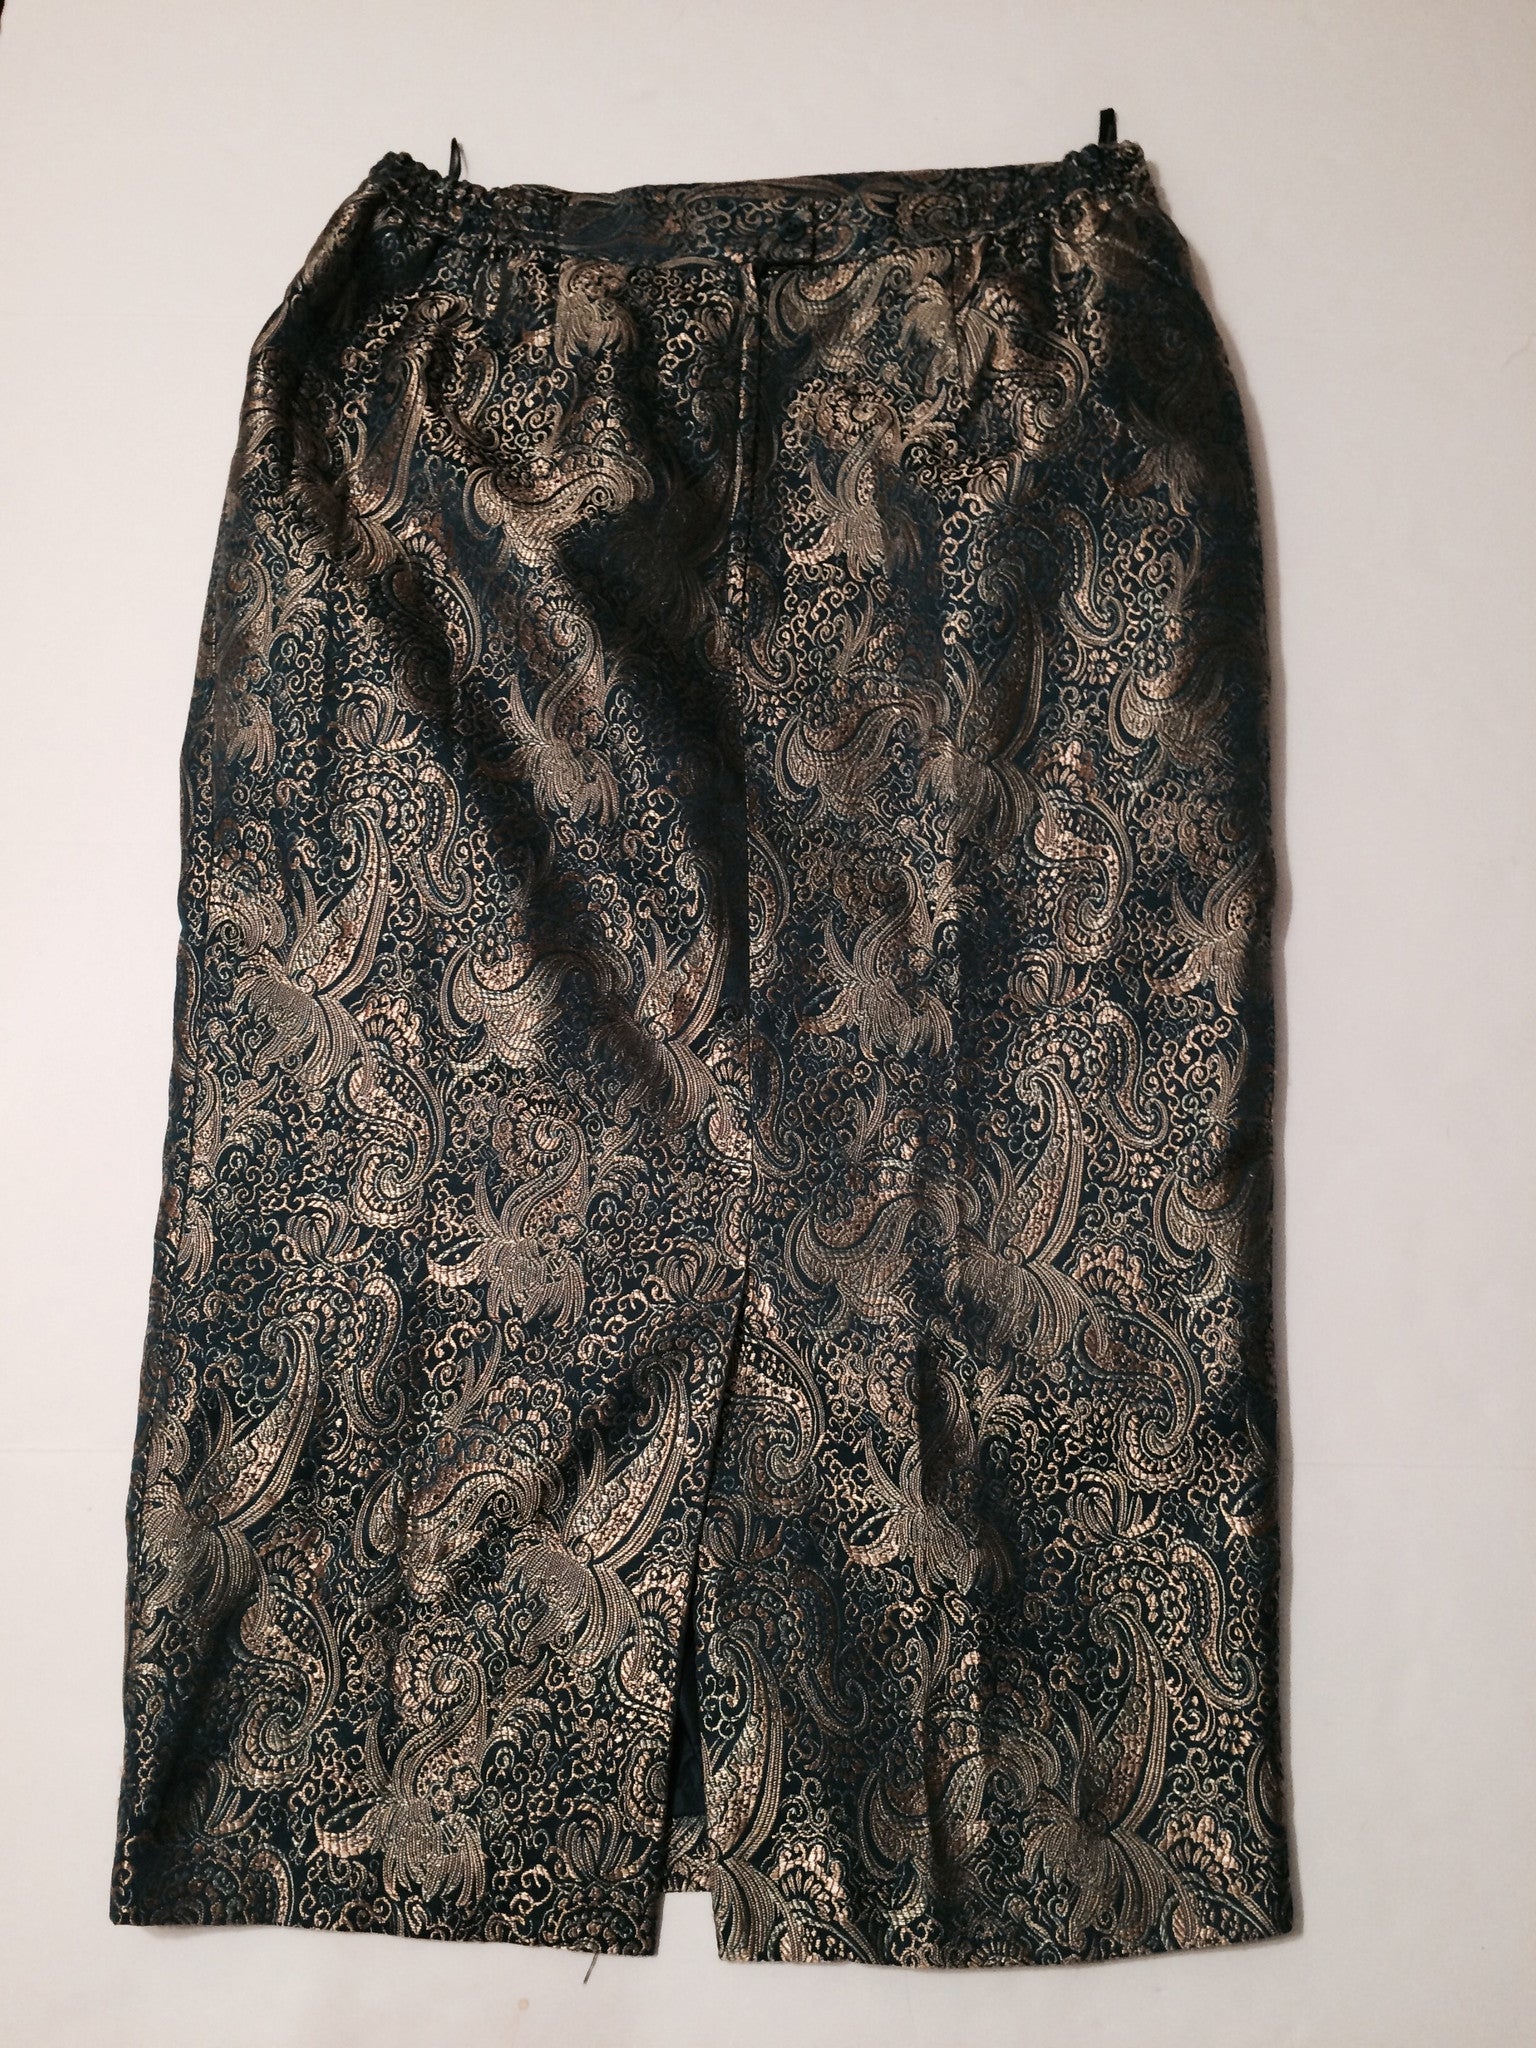 Plus Size Vintage Brocade Skirt Size 16W